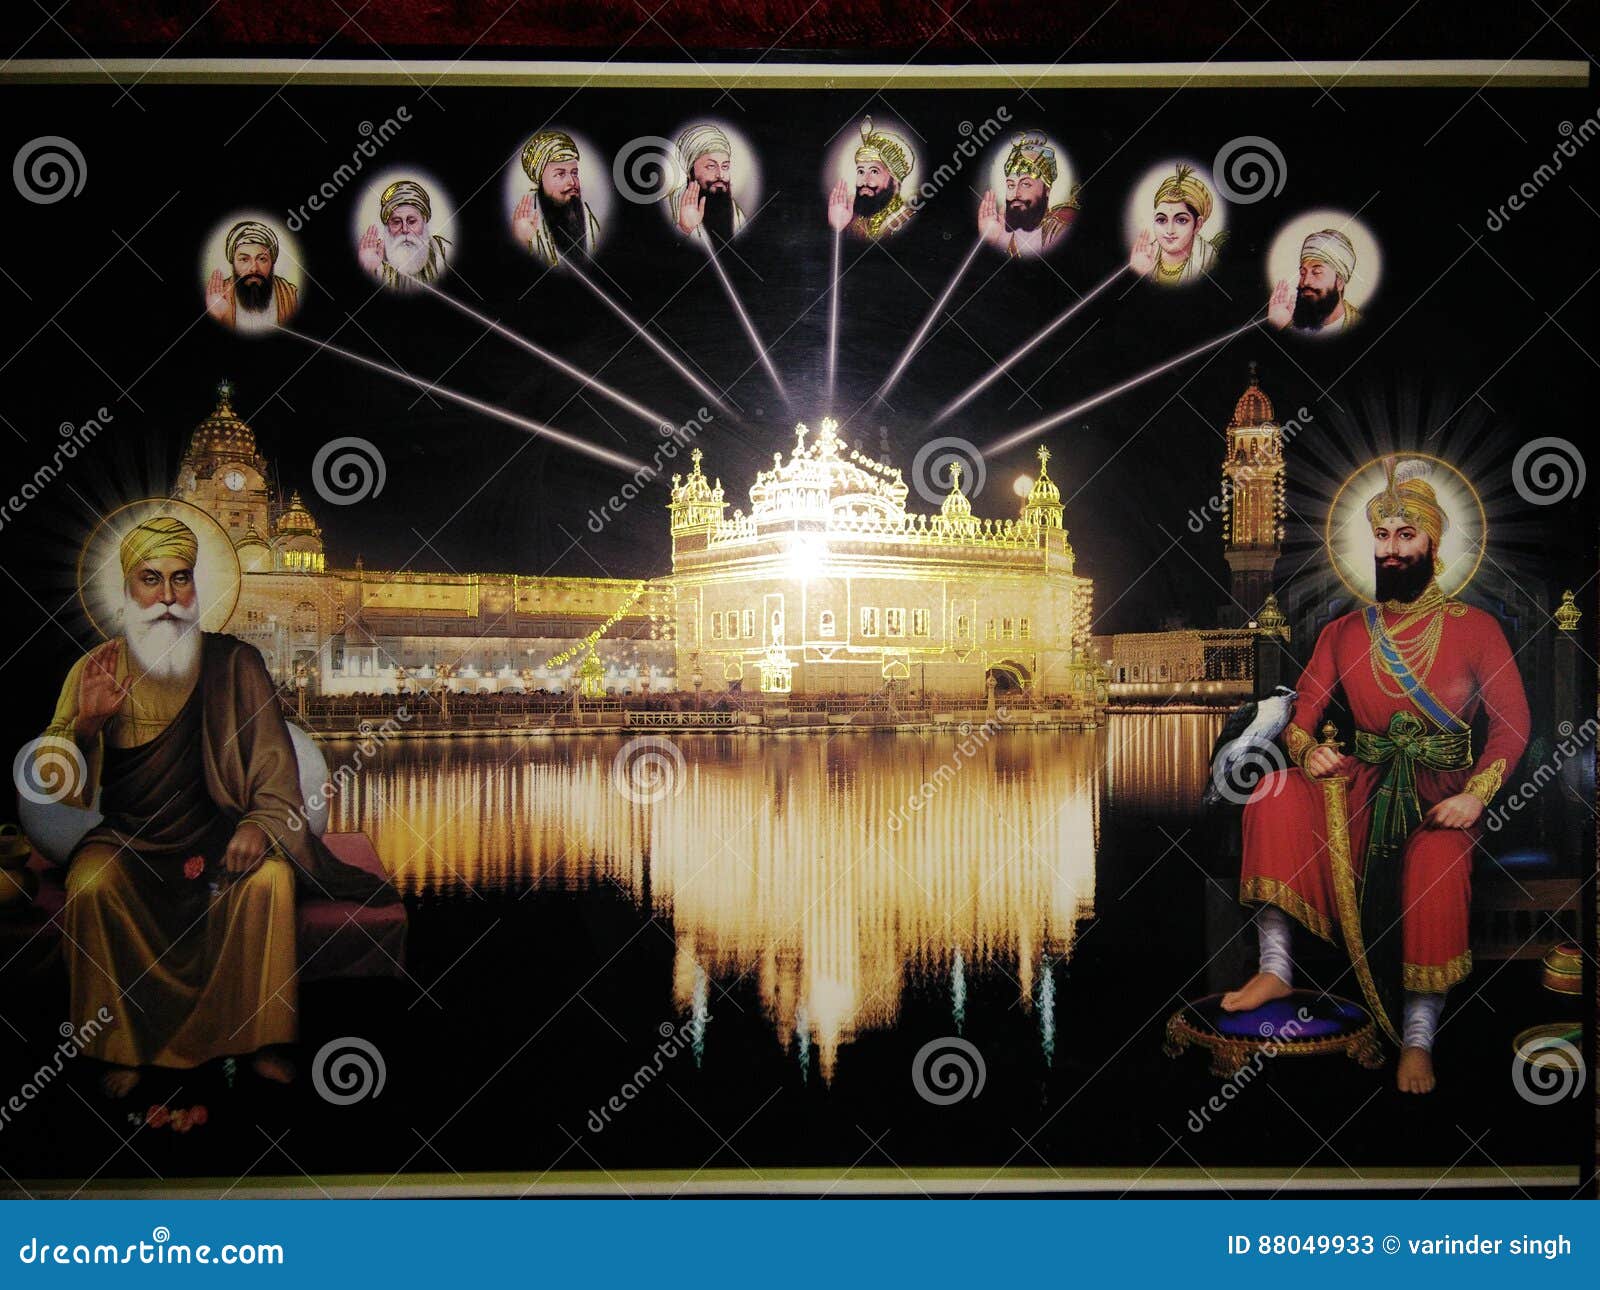 10 Sikh Guru Stock Photos - Free & Royalty-Free Stock Photos from Dreamstime